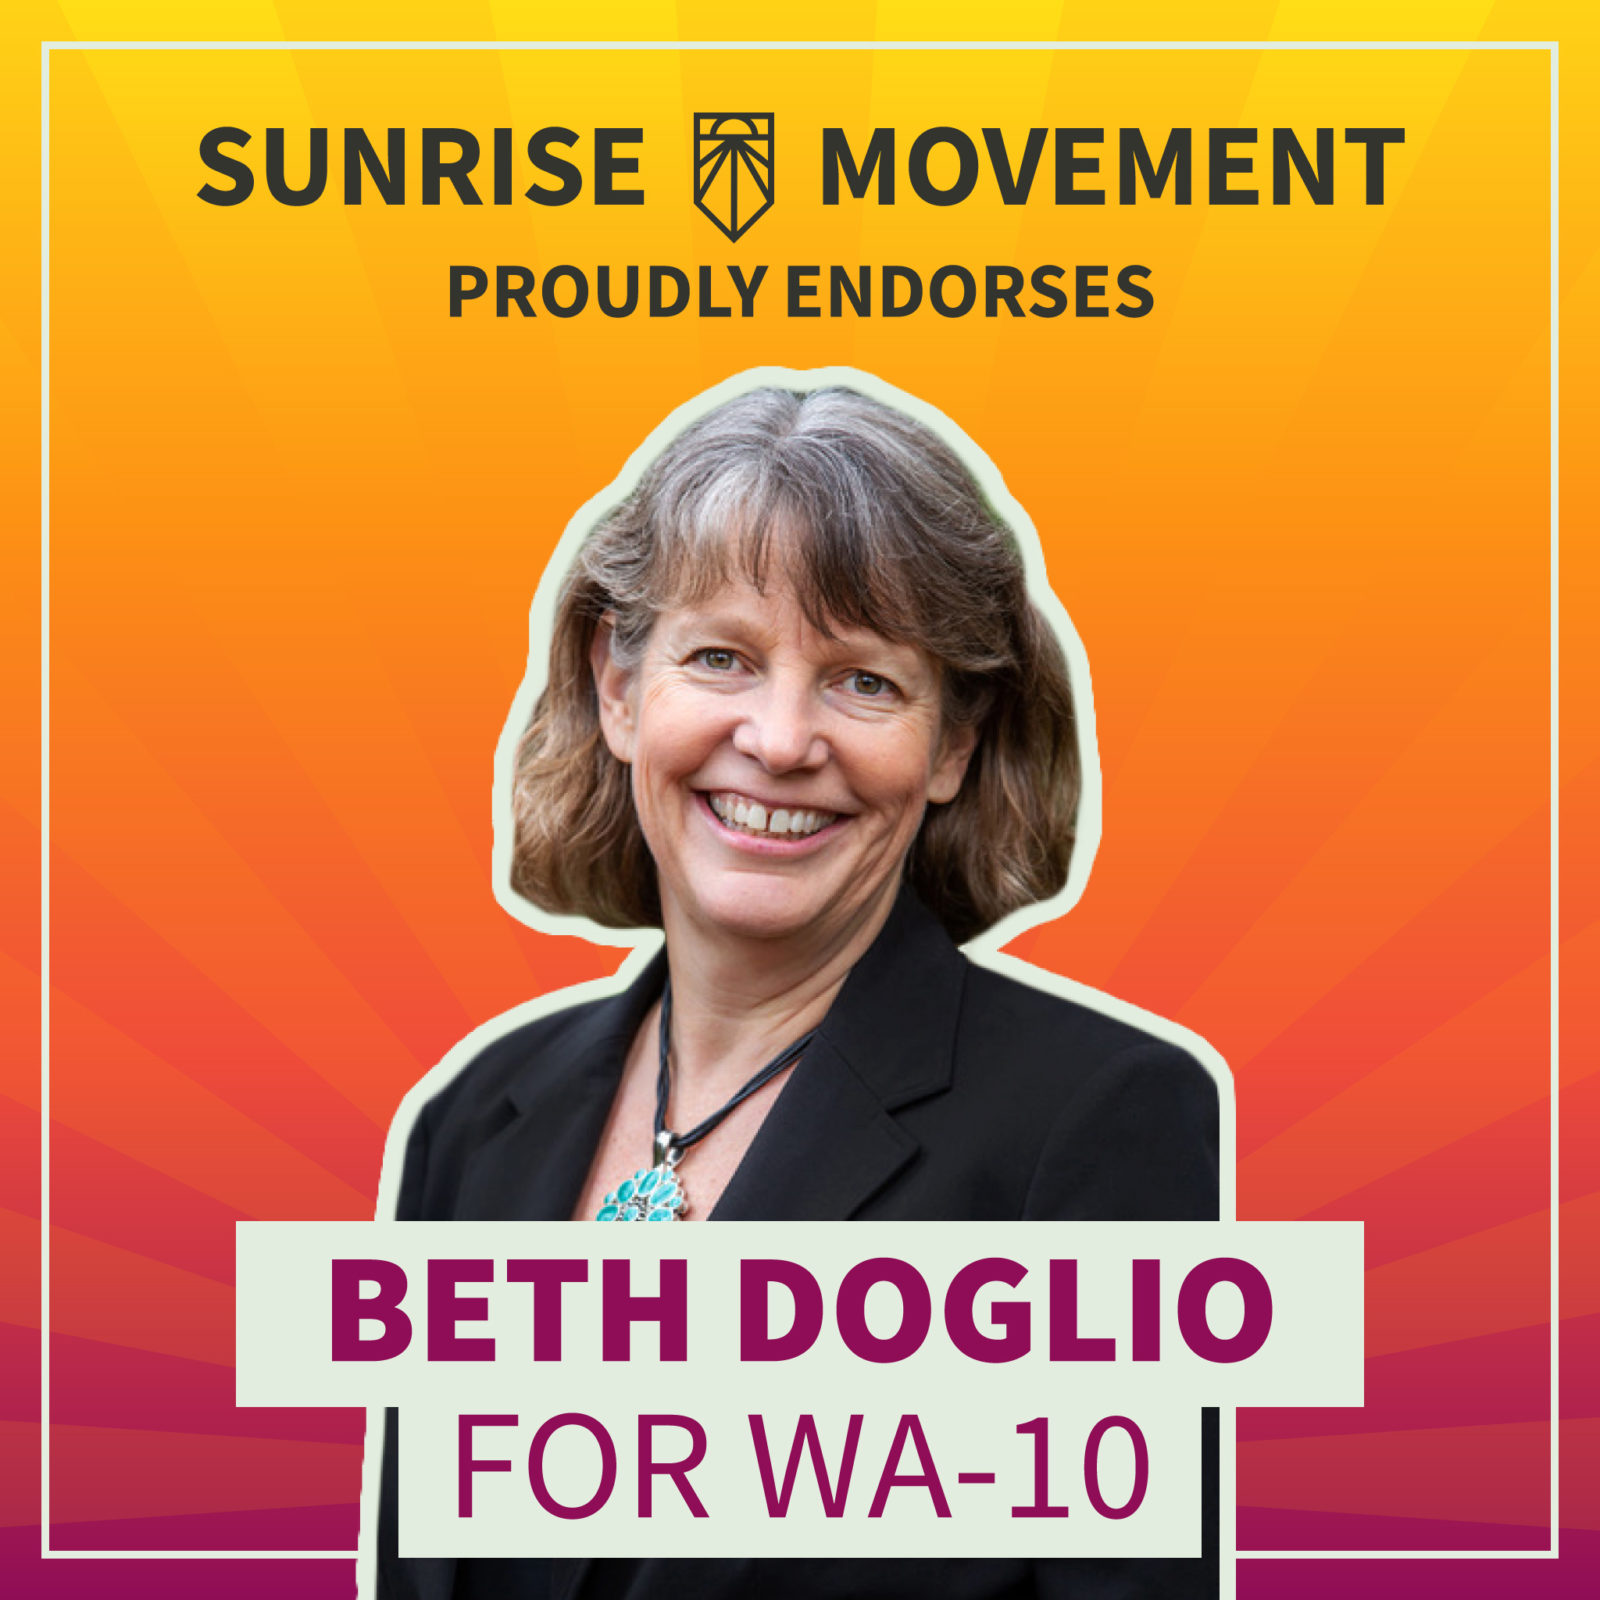 A photo of Beth Doglio with text: Sunrise Movement proudly endorses Beth Doglio for WA-10.